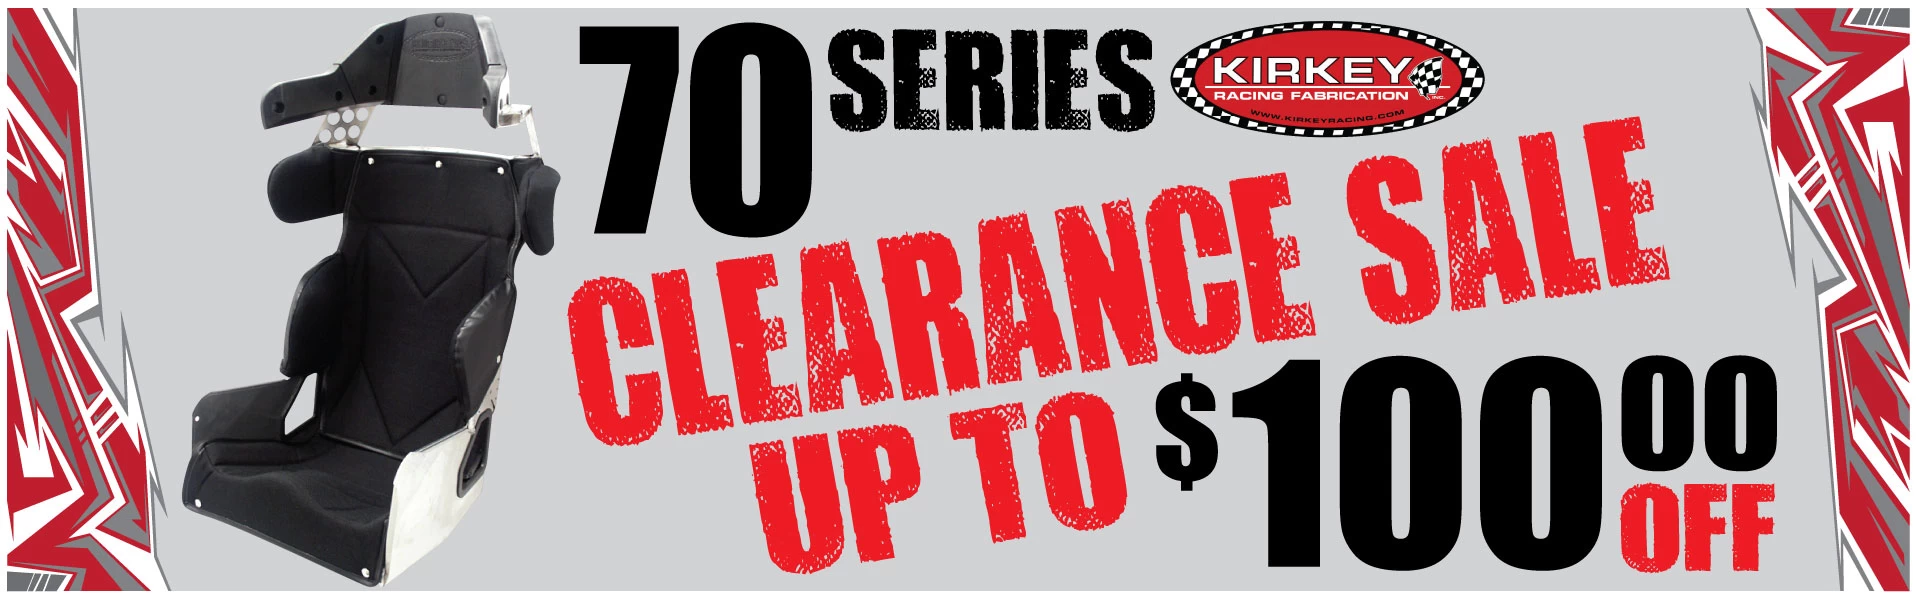 Kirkey 70 Series racing seats clearance sales at Day Motor Sports.